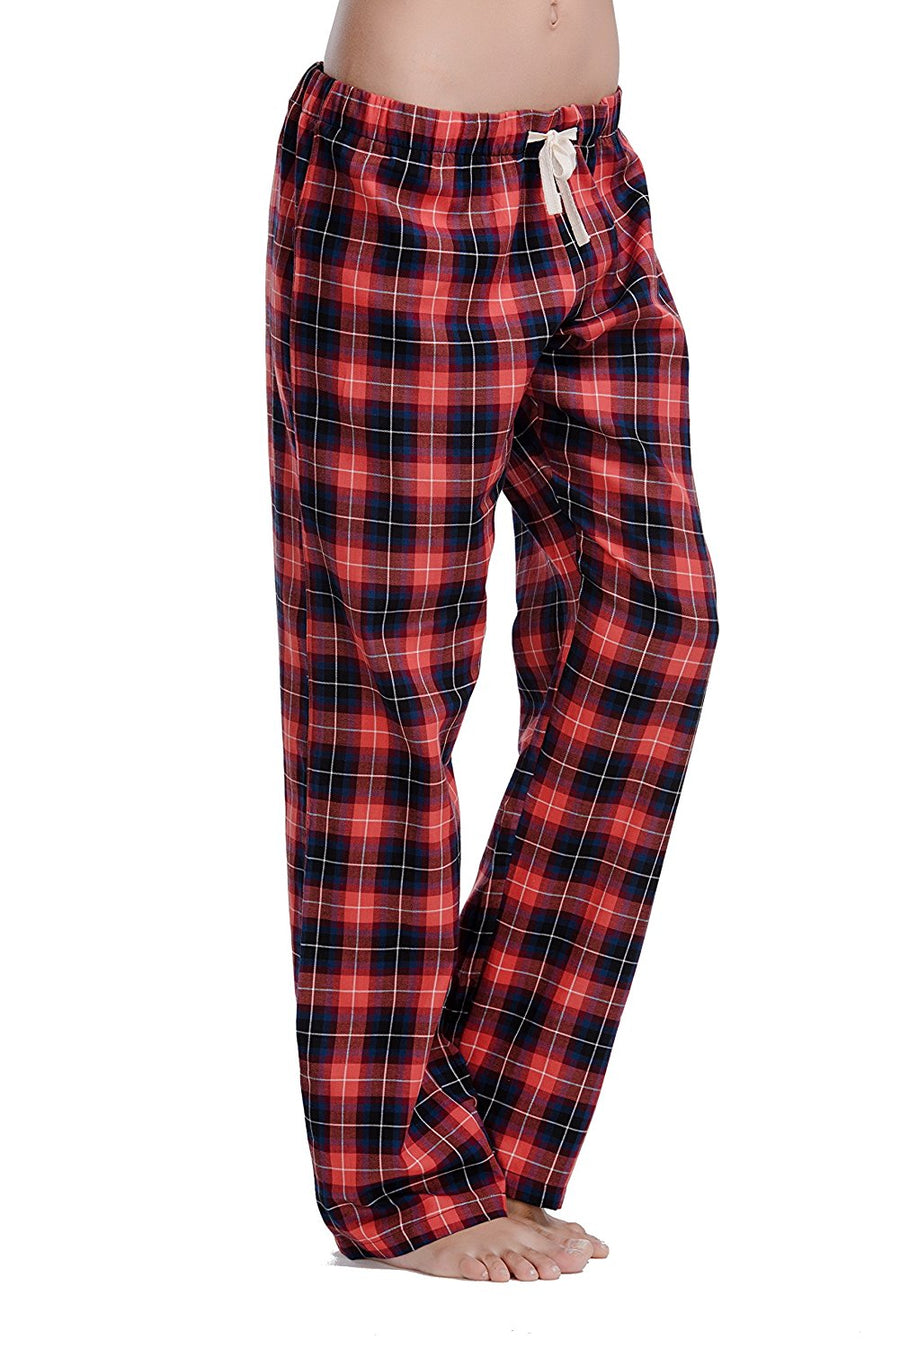 ZXZY Women Buffalo Plaid Print Pockets Tie Waist Long Pajama Pants 